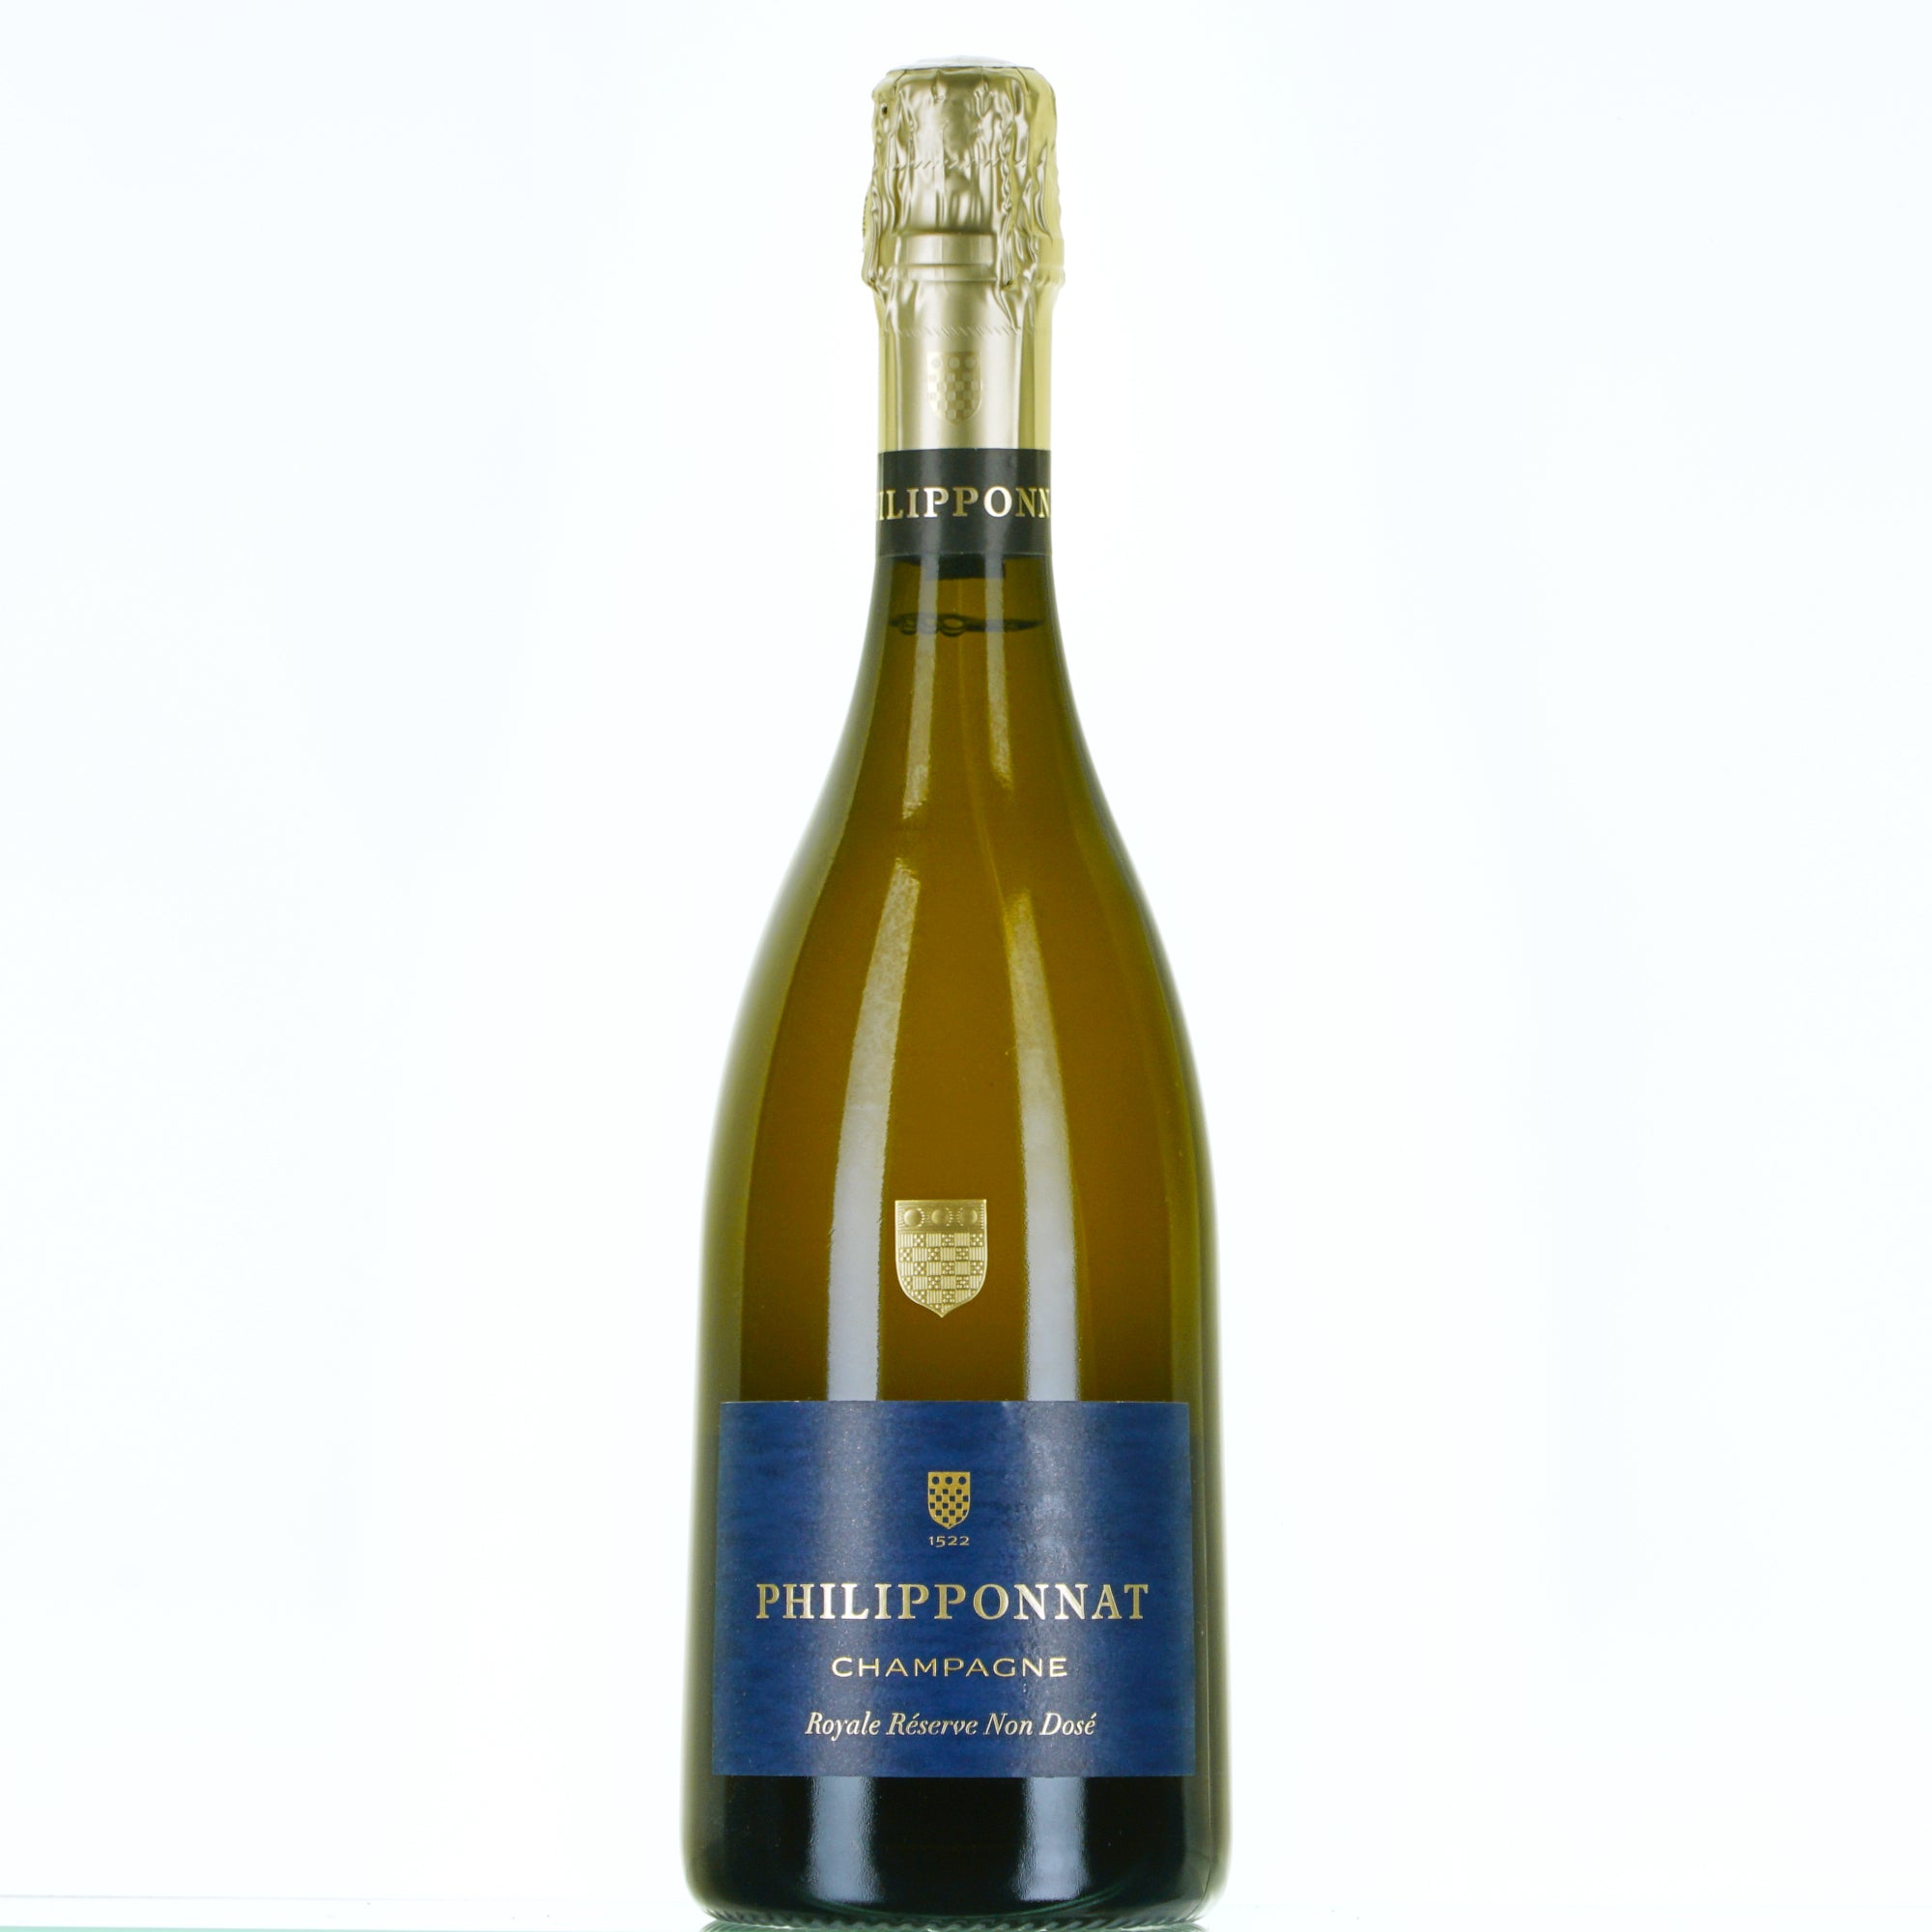 Champagne Royal Reserve non Dose' Philipponnat lt.0,750